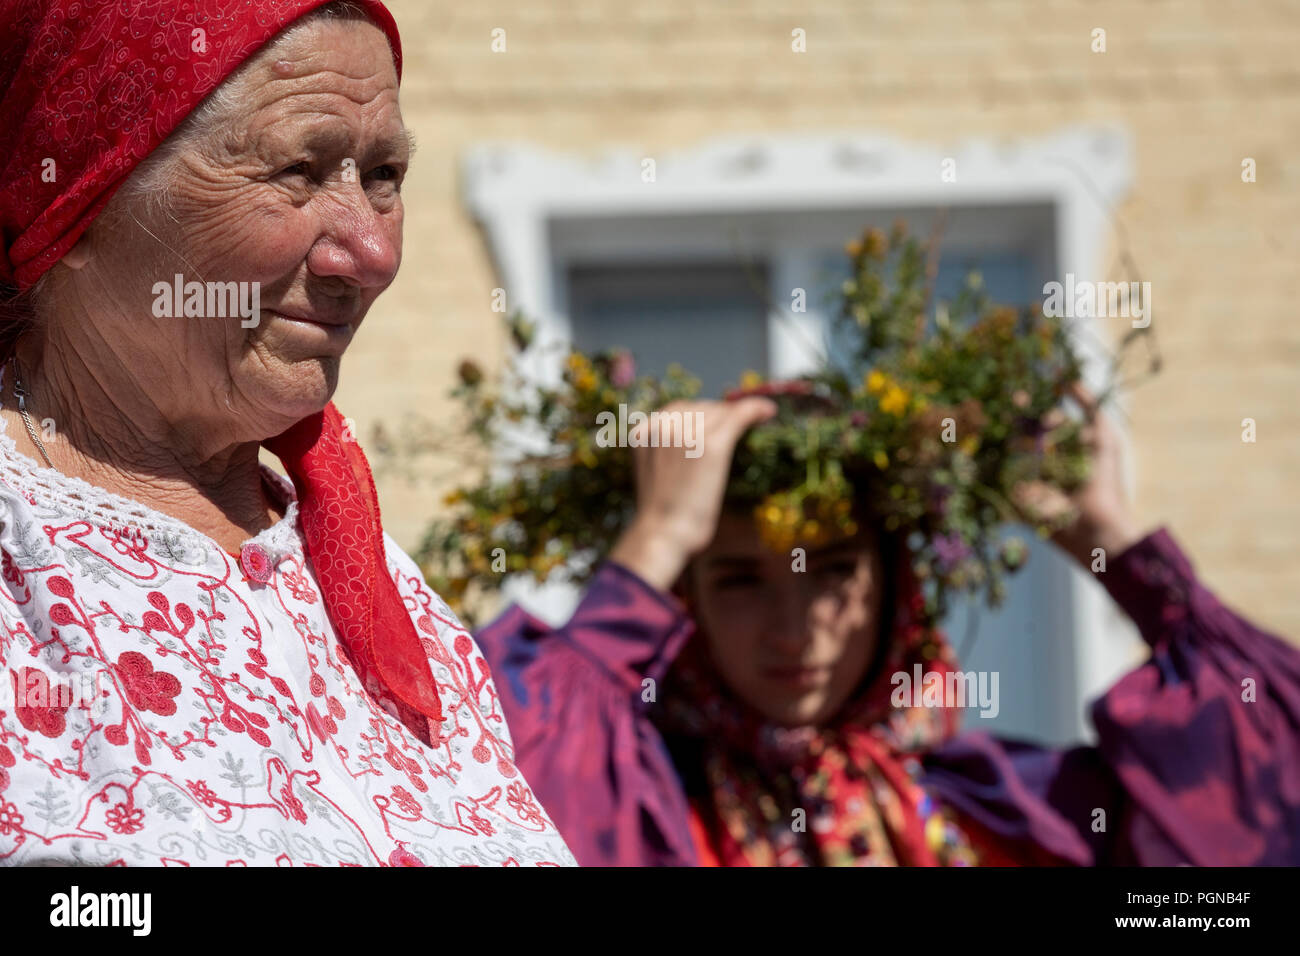 Rural residents of Tambov region during a rural holiday in Atmanov Ugol village, Tambov region, Russia Stock Photo